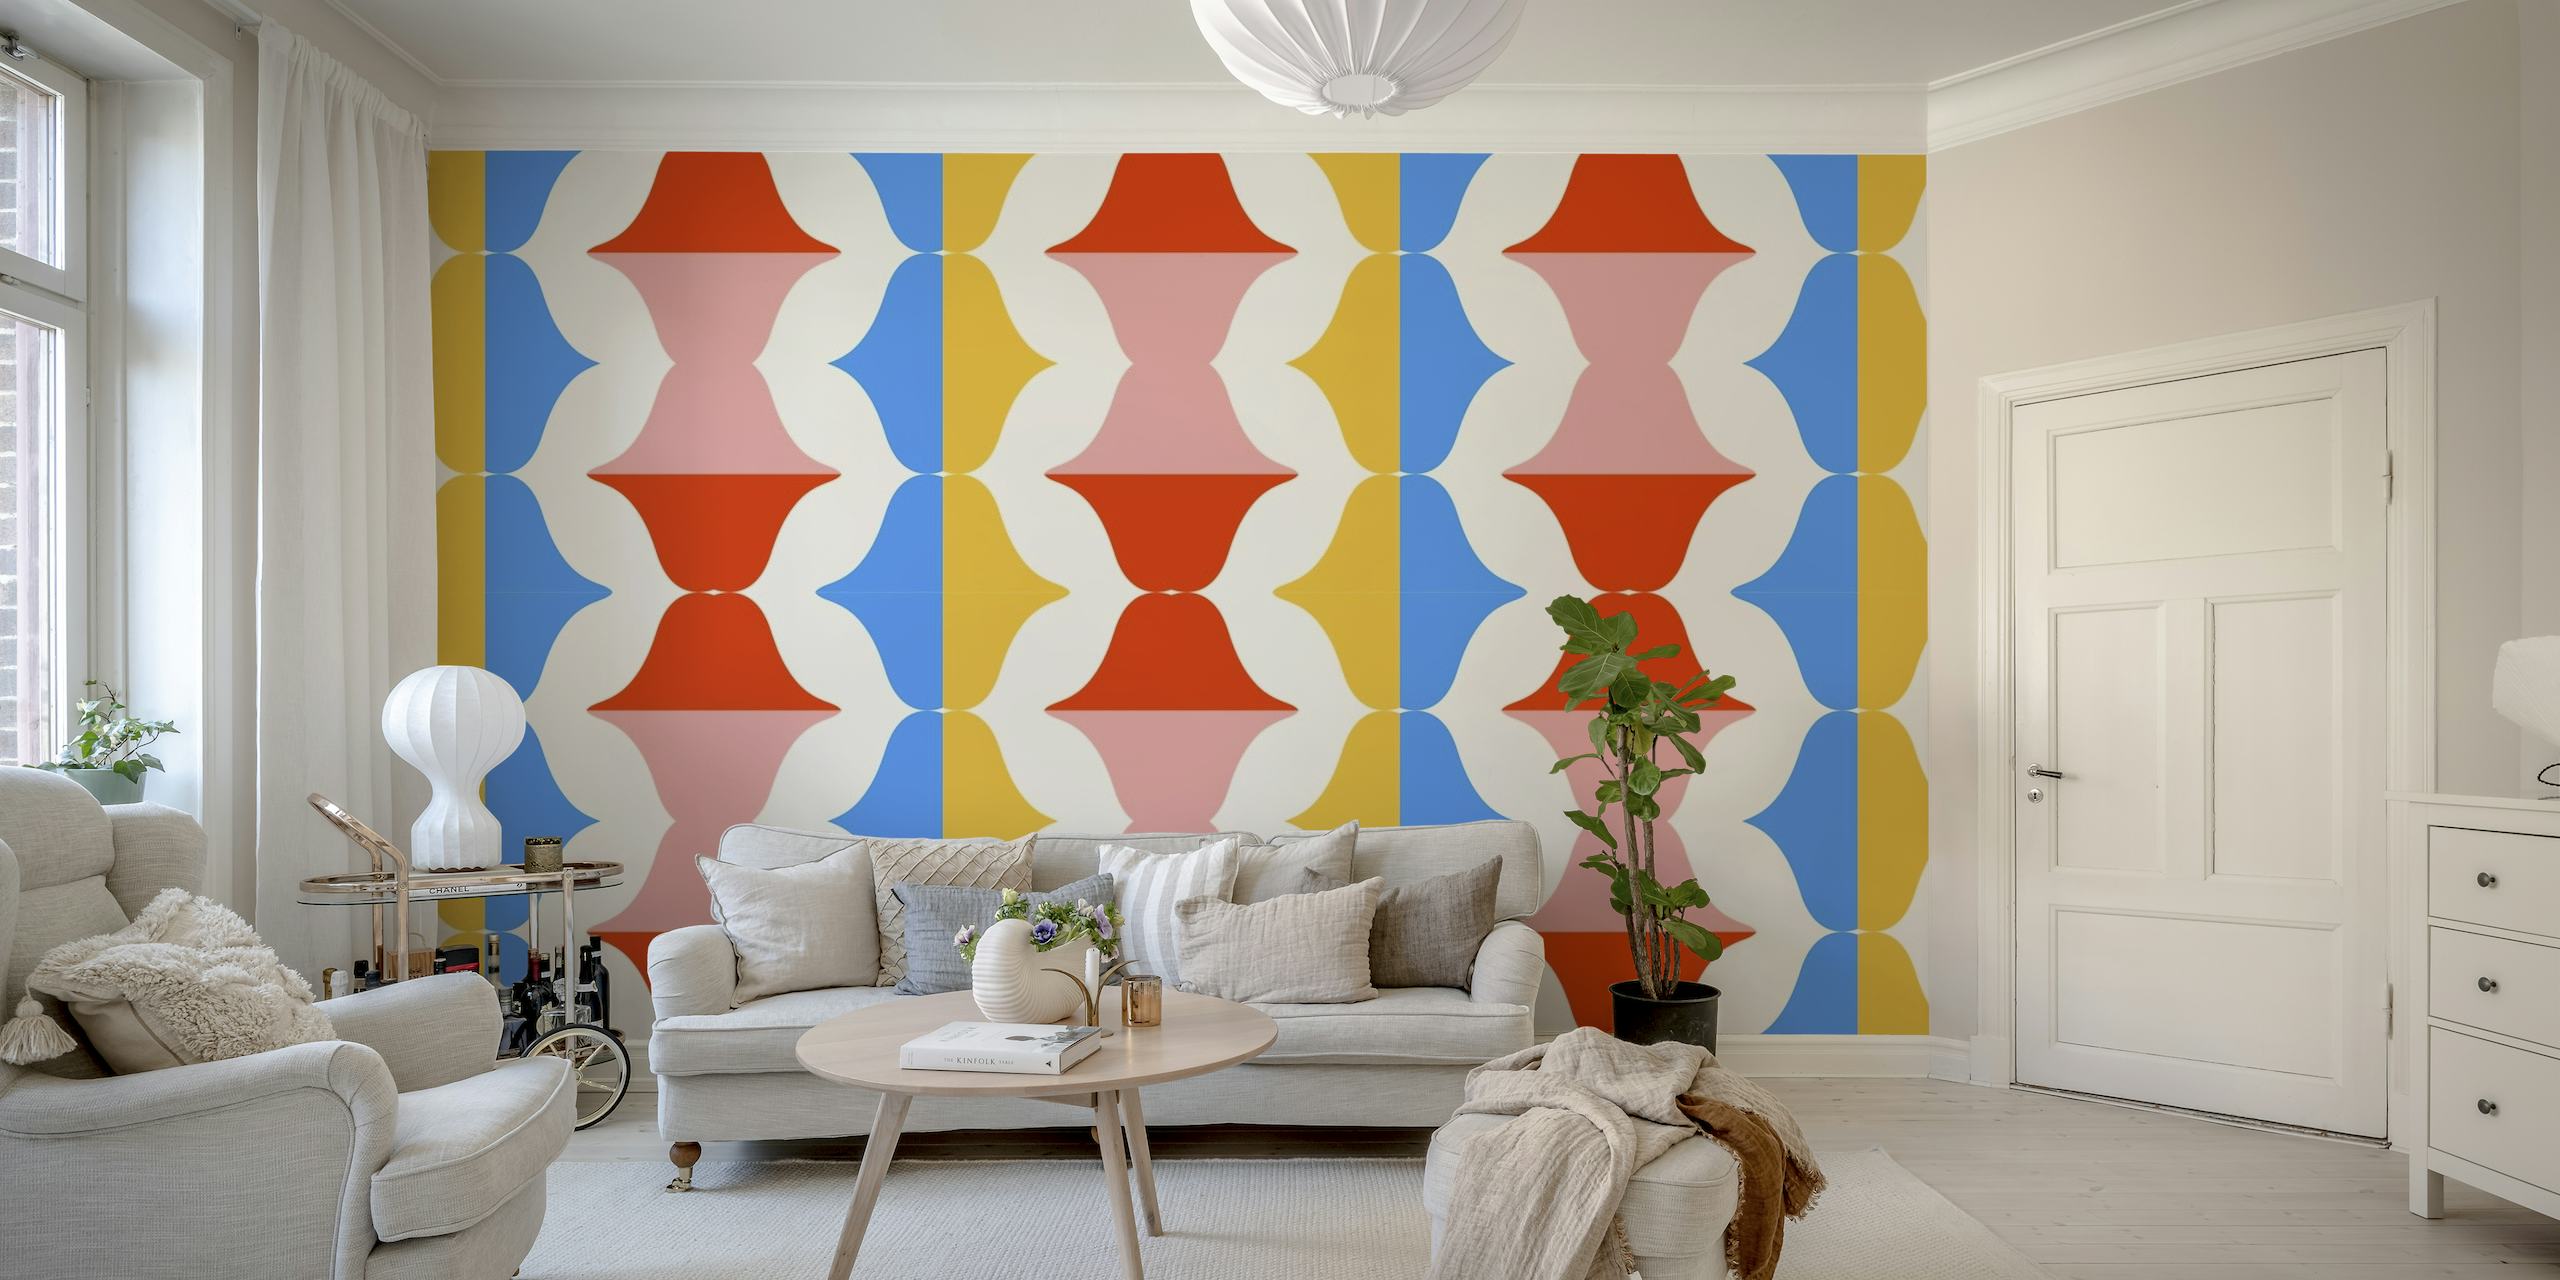 Retroinspirerad tapet med läppmönster i popkonststil på en geometrisk blå, orange och rosa bakgrund.